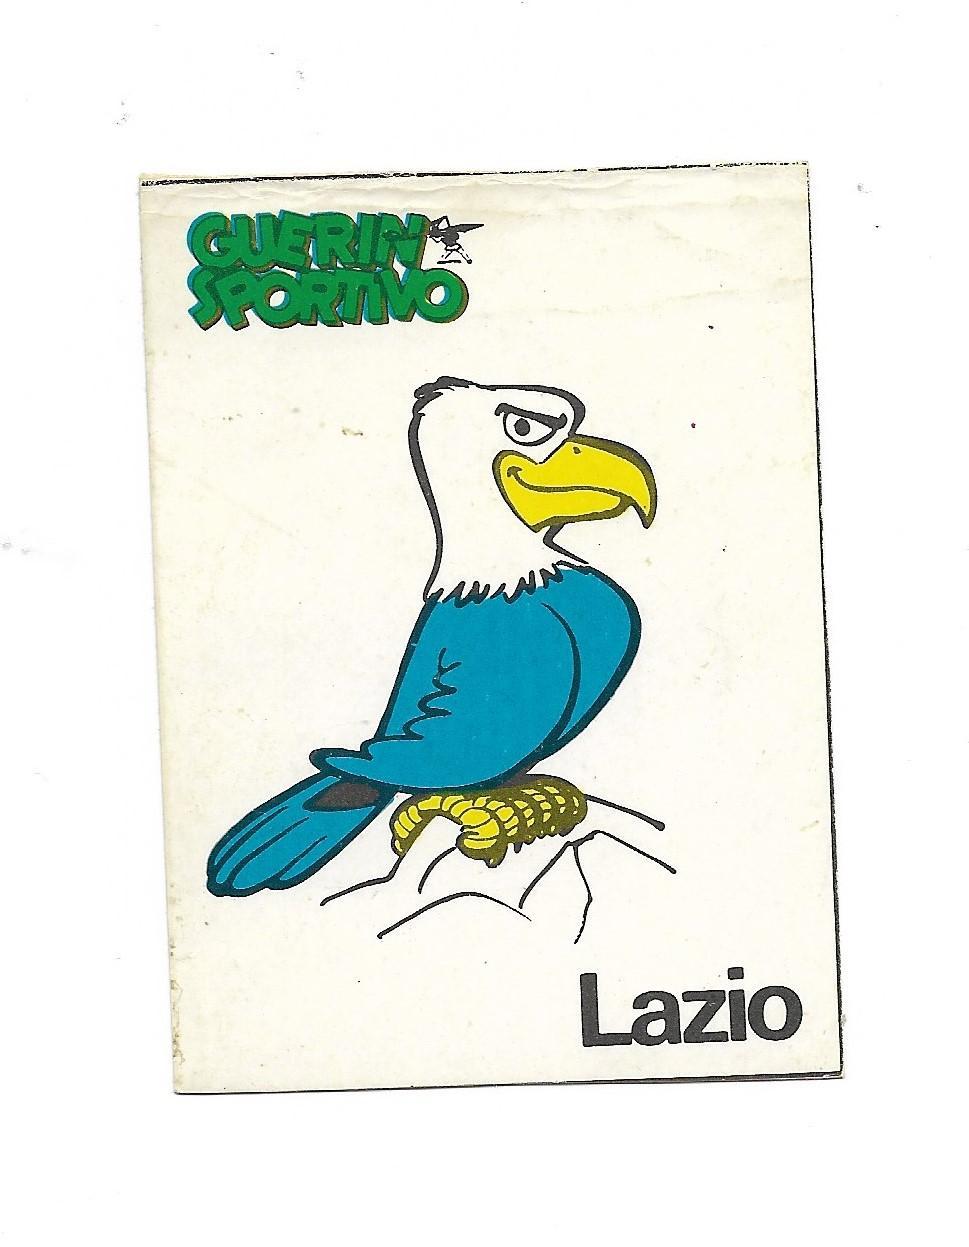 карточка_GUERIN_SPORTIVO _LAZIO